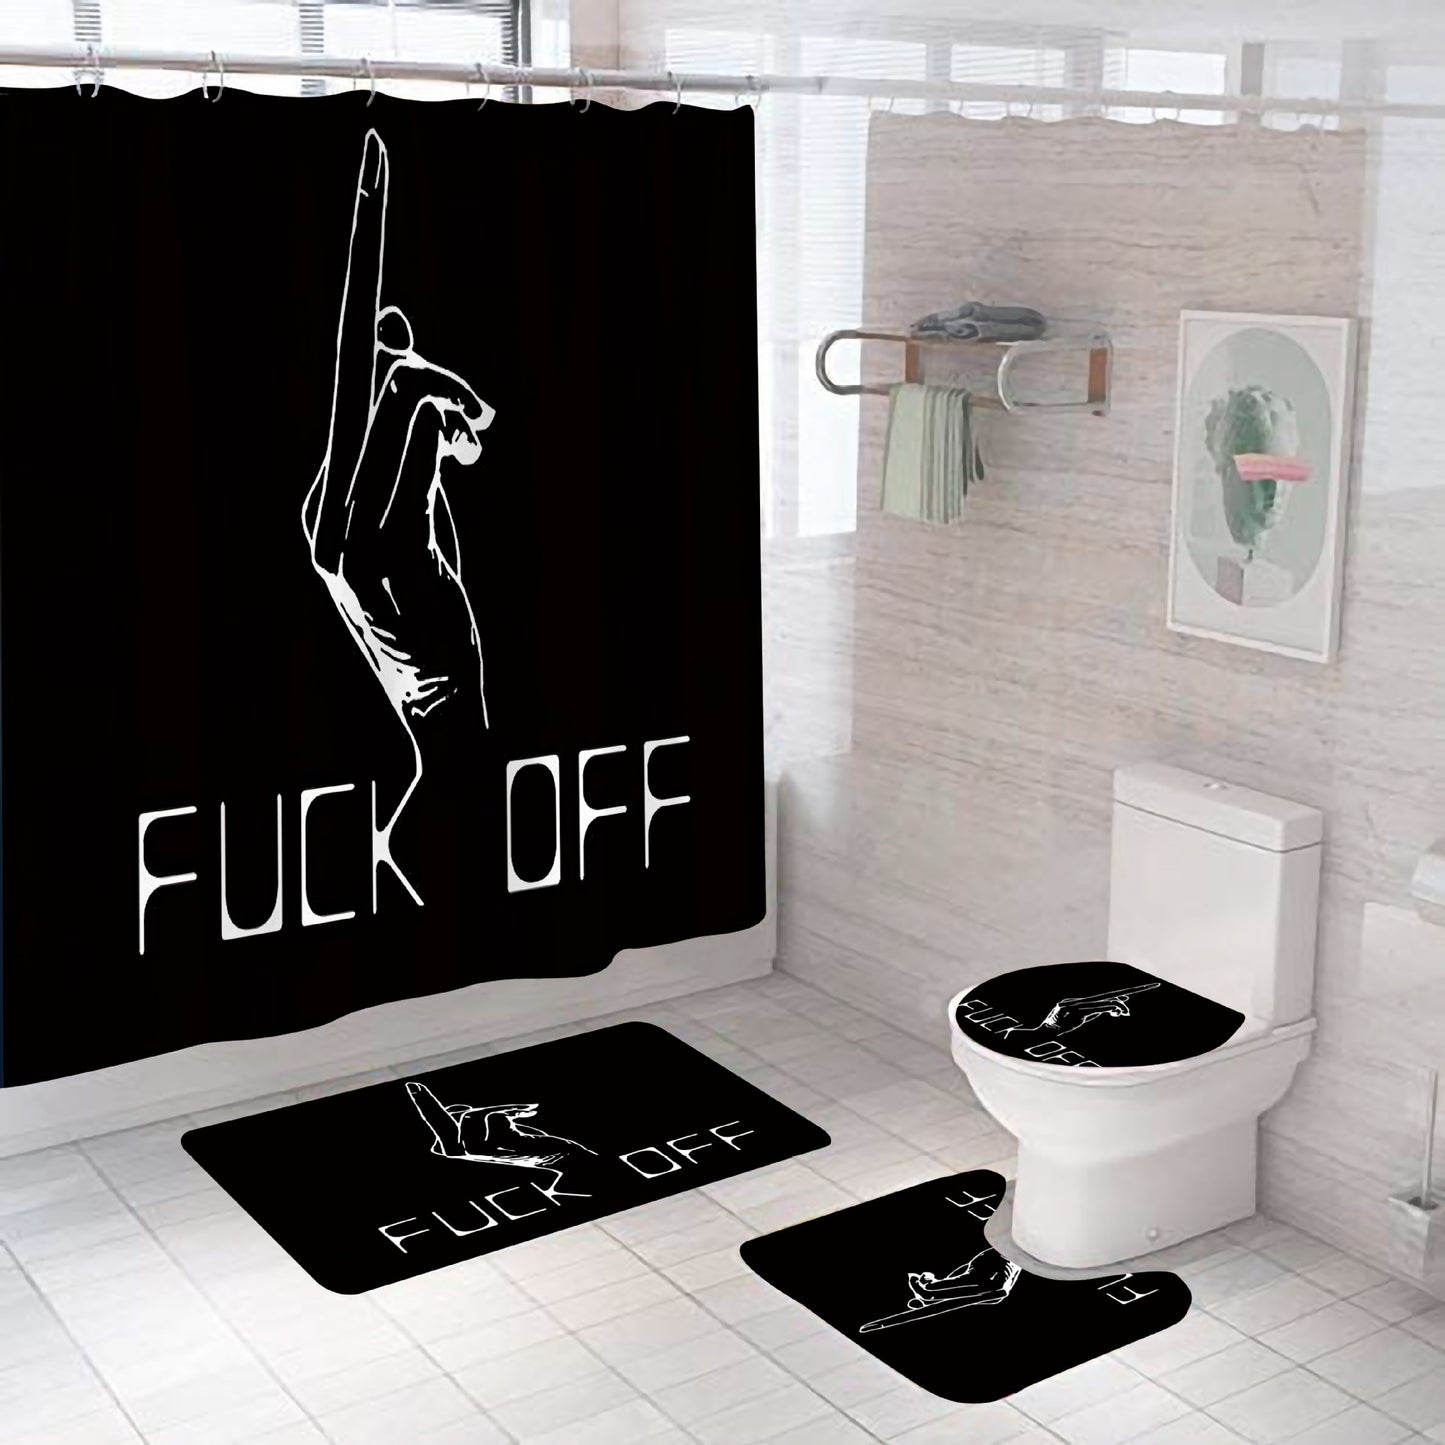 Black White Funny Meme Quote Fuck Off Finger Shower Curtain